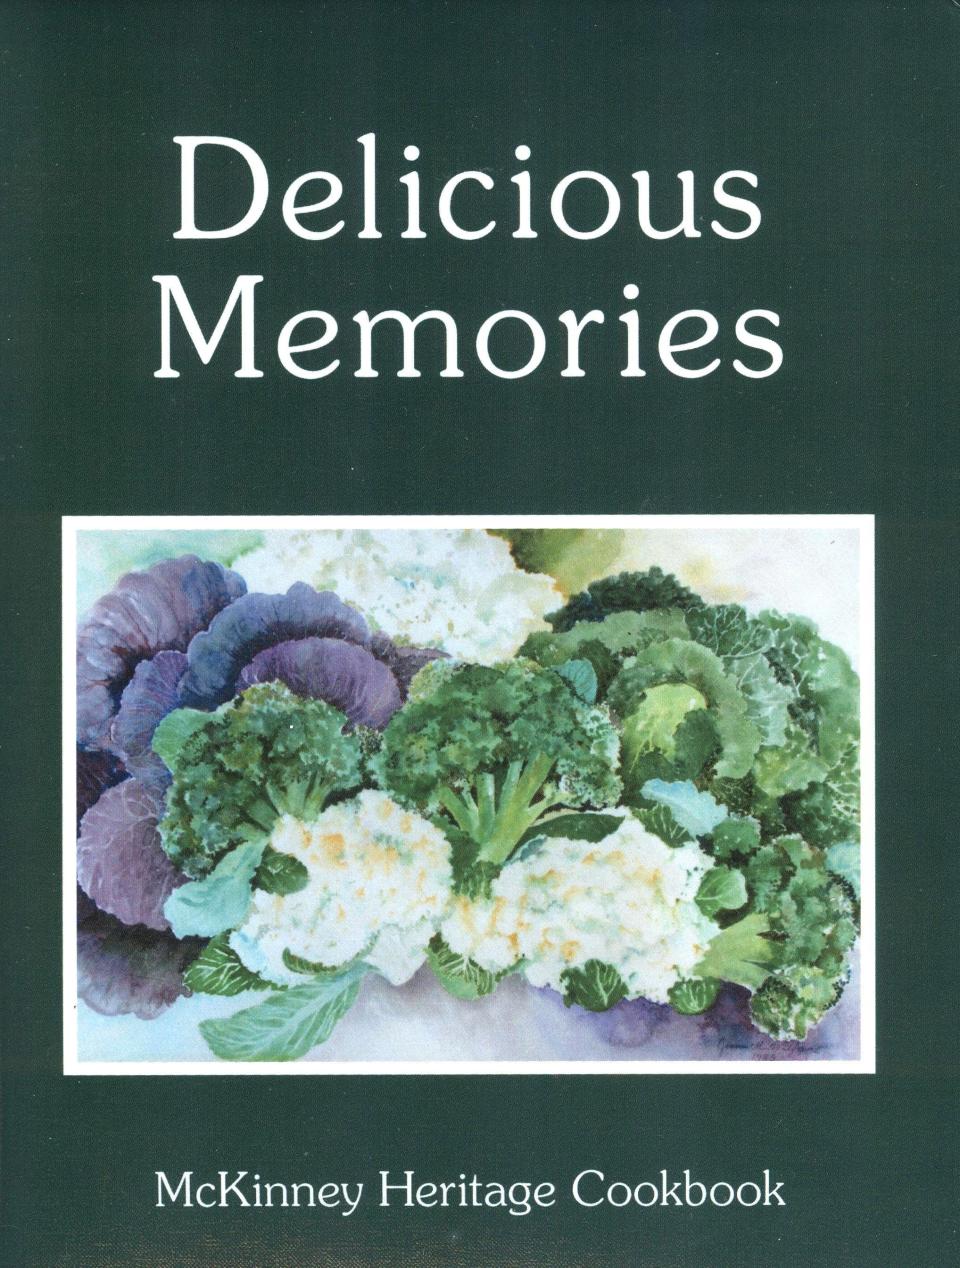 "Delicious Memories" is a "McKinney Heritage Cookbook"